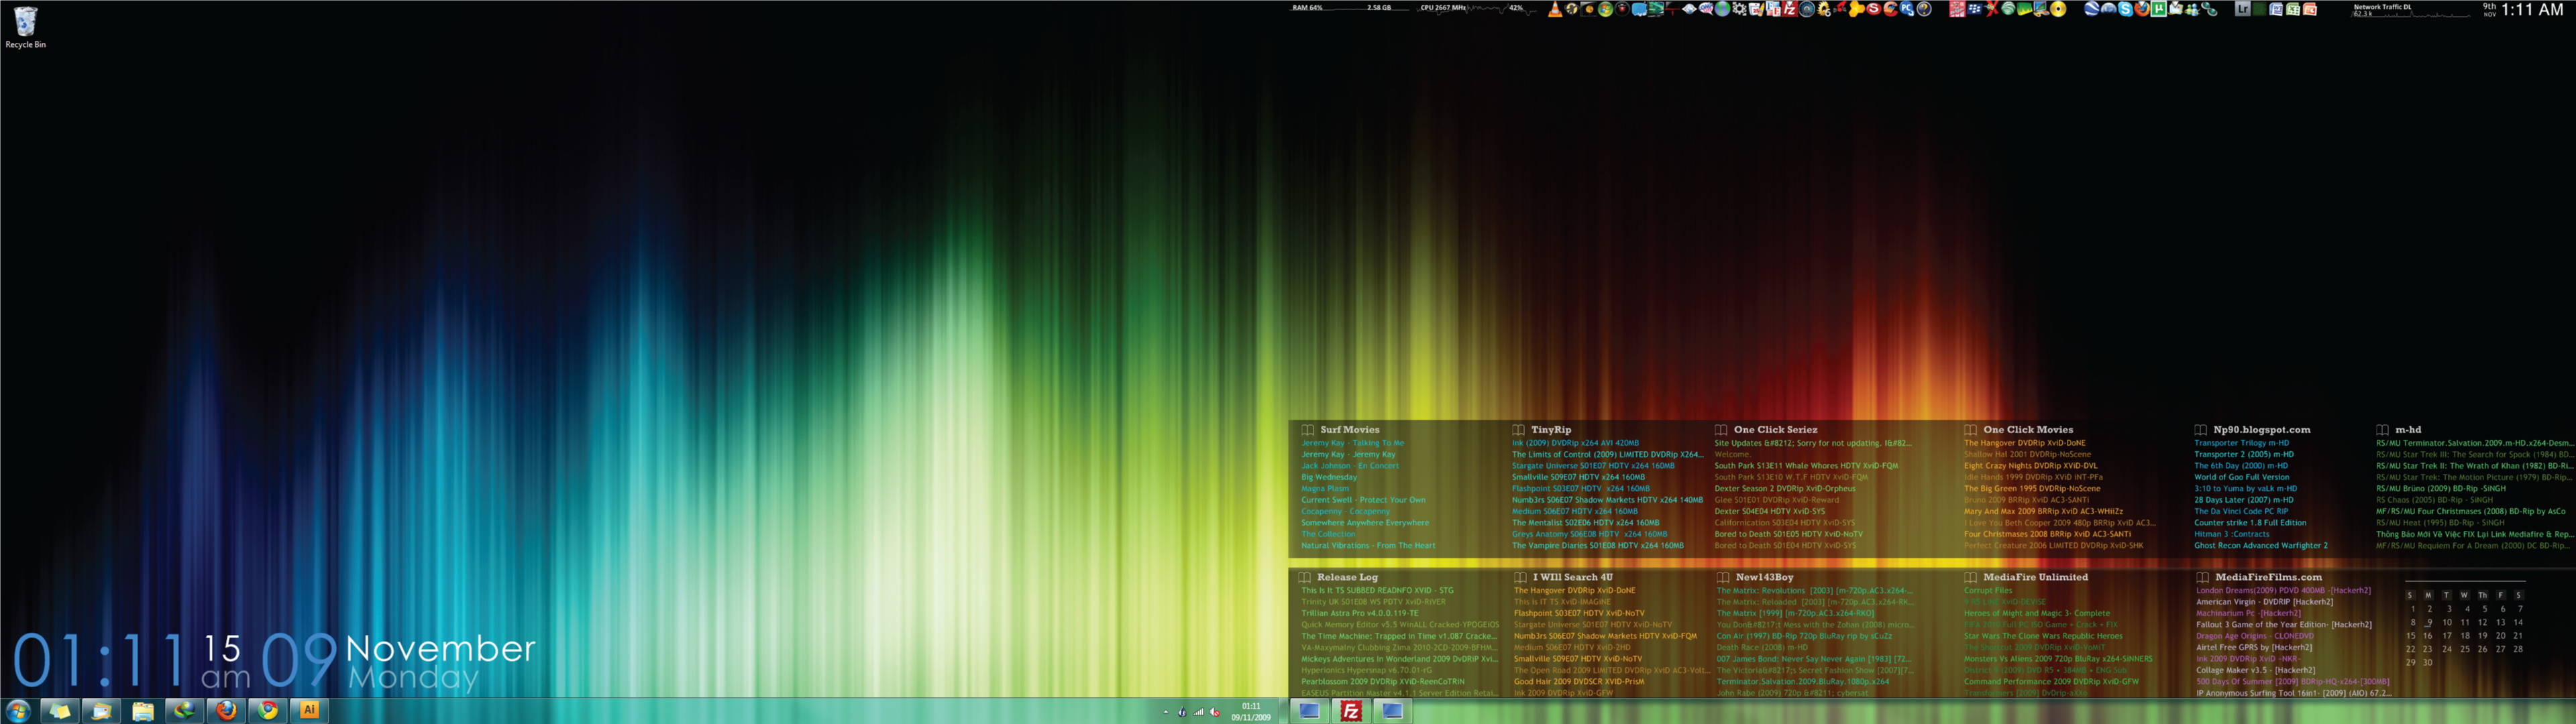 Beautiful Dual Screen Desktop HD Wallpaper